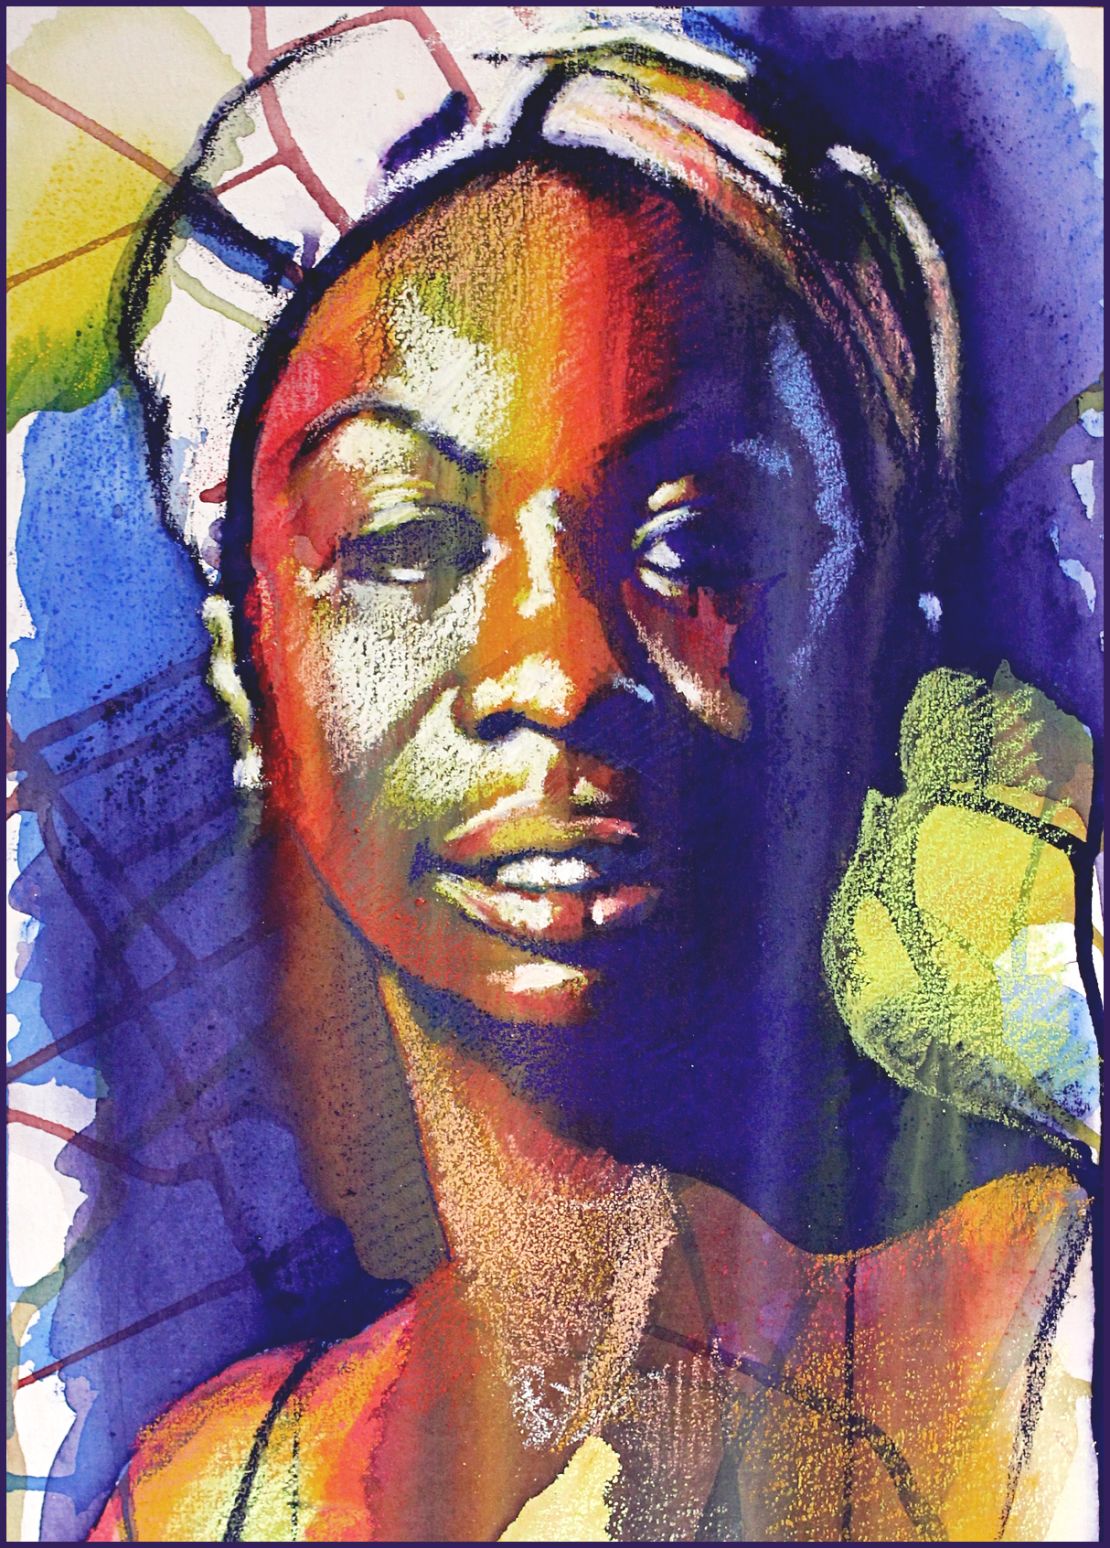 Nina Simone: a revolutionary artist fighting for freedom